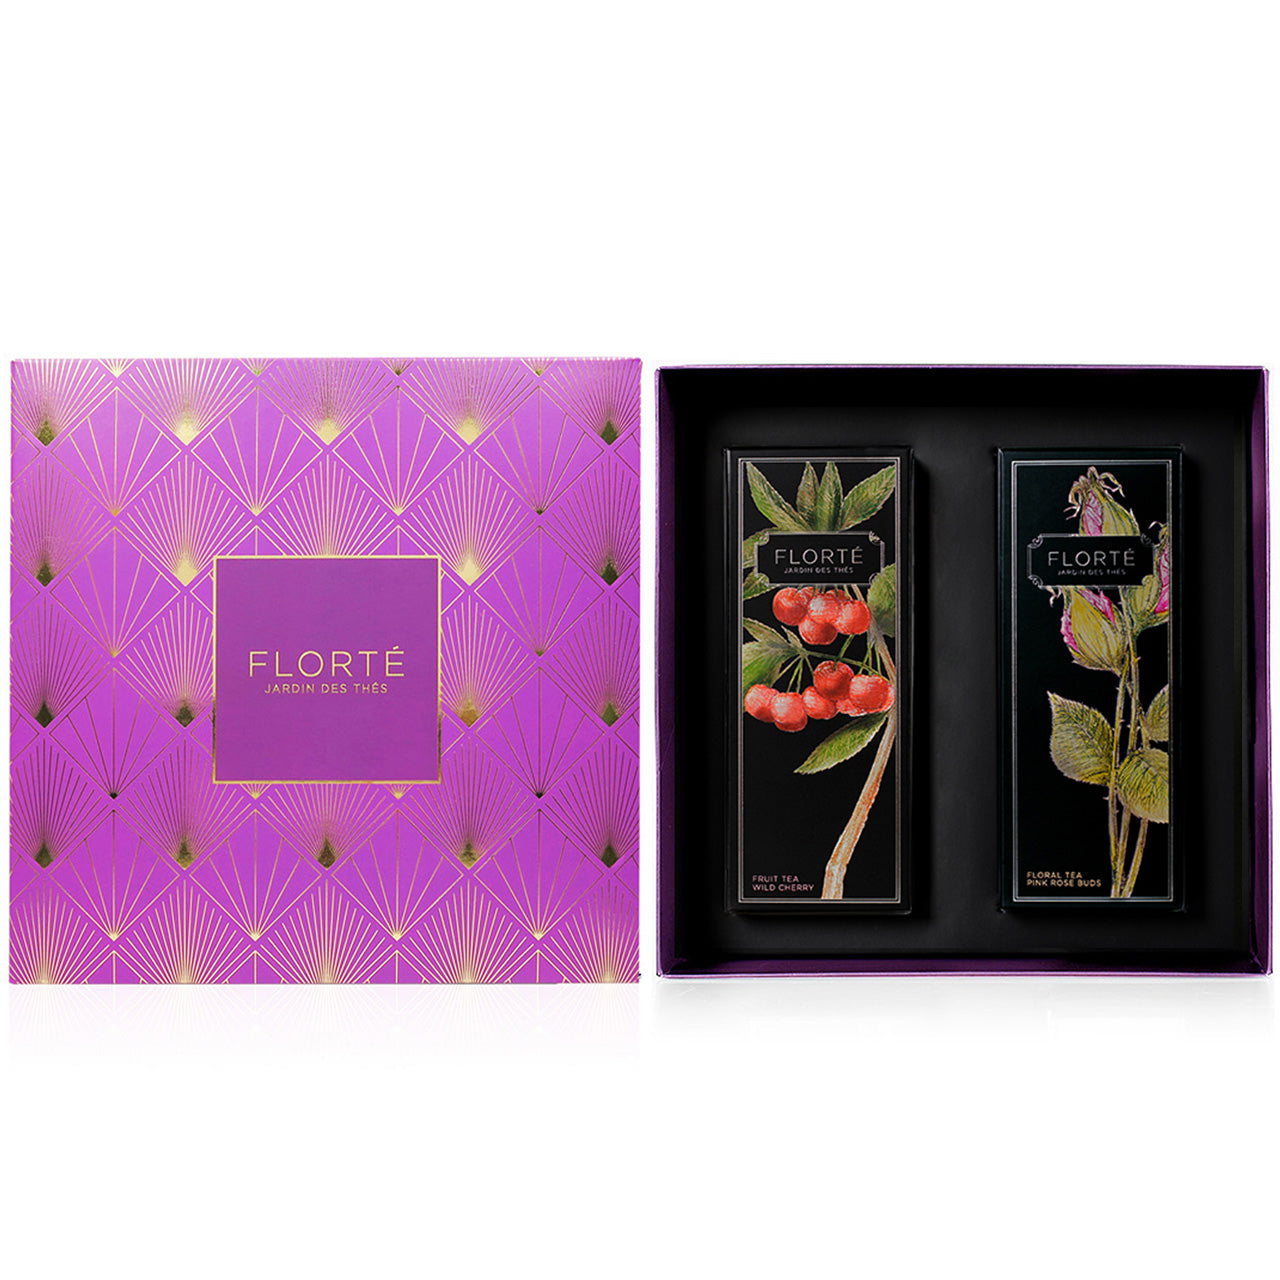 Florté Gift Set with 2 Loose Teas